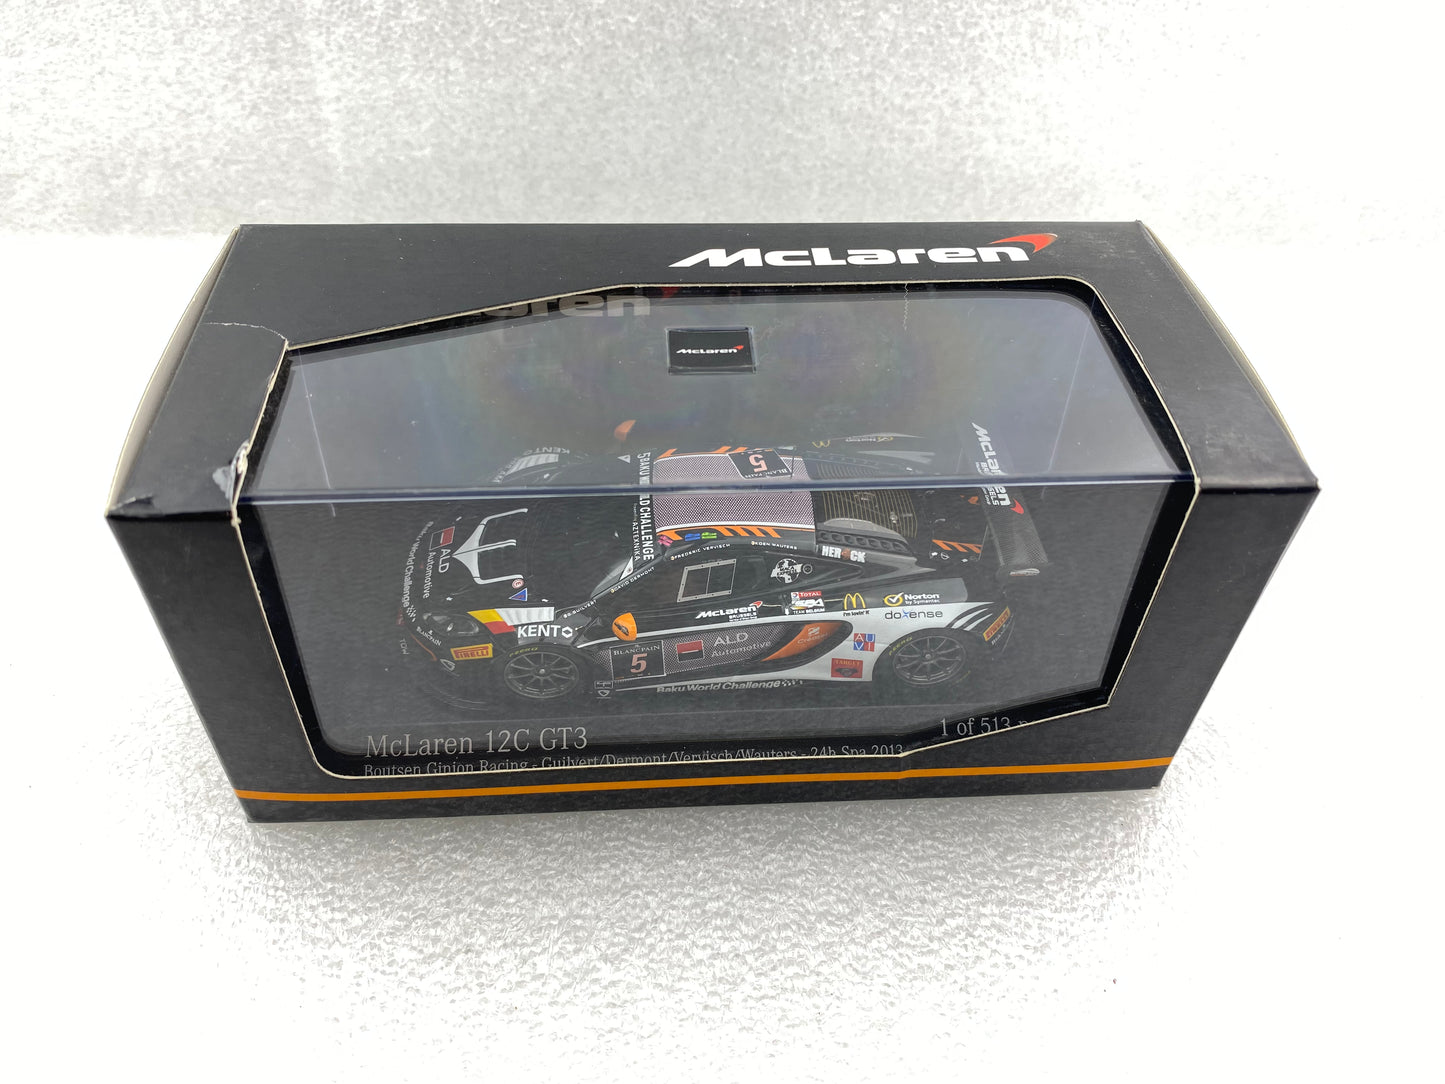 Minichamps 1:43 McLaren 12C GT3 Boutsen Ginion Racing Guilvert/Dermont/Vervisch/Wauters #5 24H Spa 2013 437131305